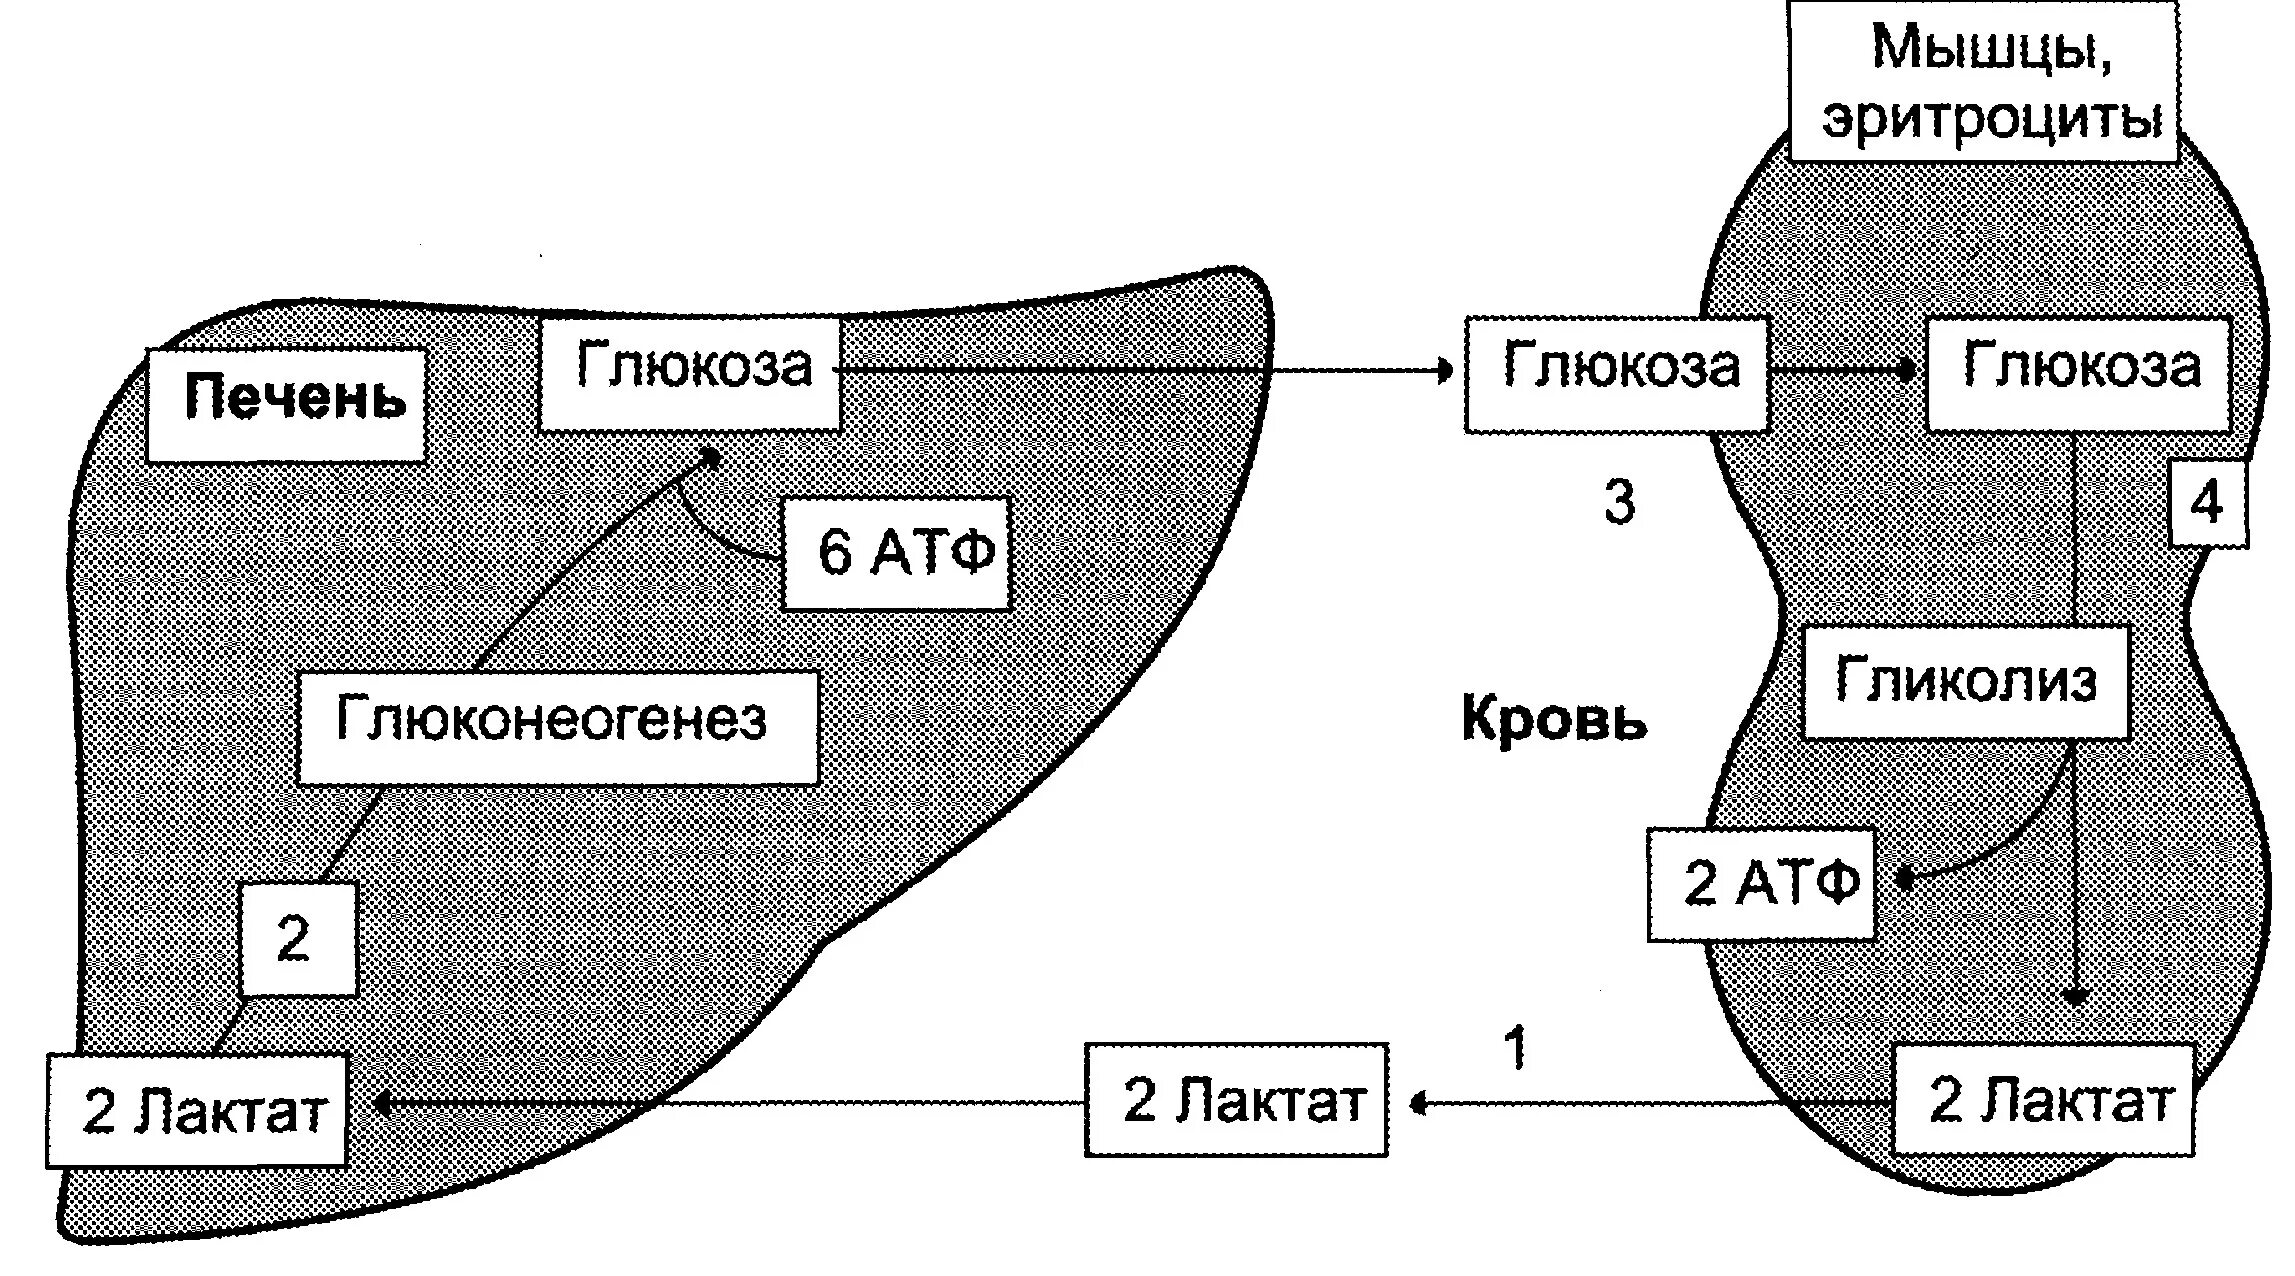 Синтез Глюкозы из лактата. Цикл кори биохимия лактат. Схема цикла кори биохимия. Схема синтеза Глюкозы из лактата.